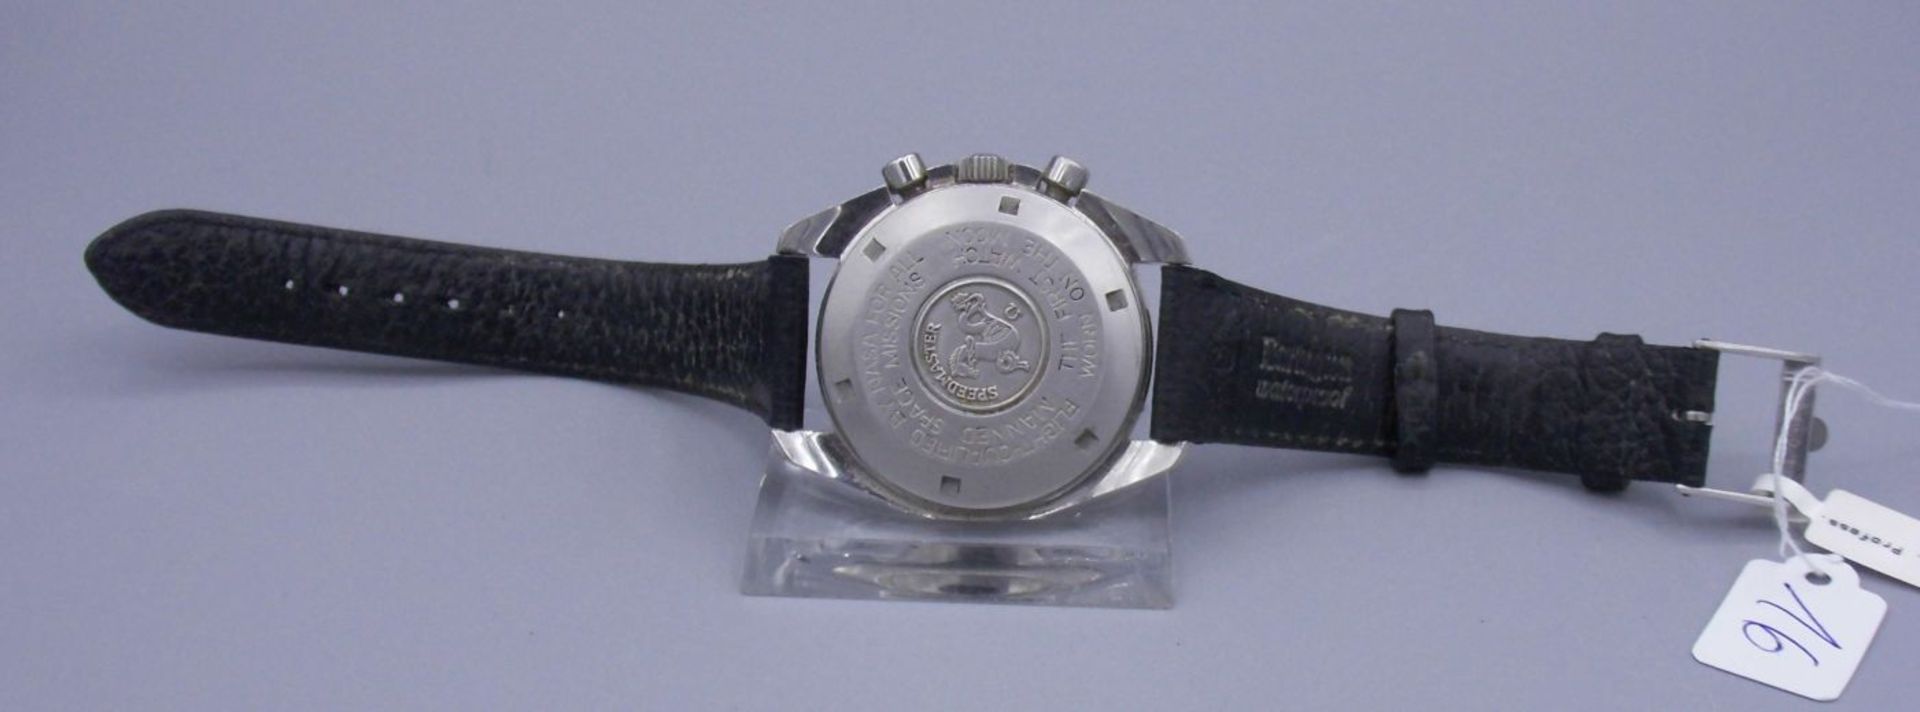 VINTAGE ARMBANDUHR / CHRONOGRAPH: OMEGA SPEEDMASTER PFROFESSIONAL - "MOONWATCH" / wristwatch, - Bild 4 aus 10